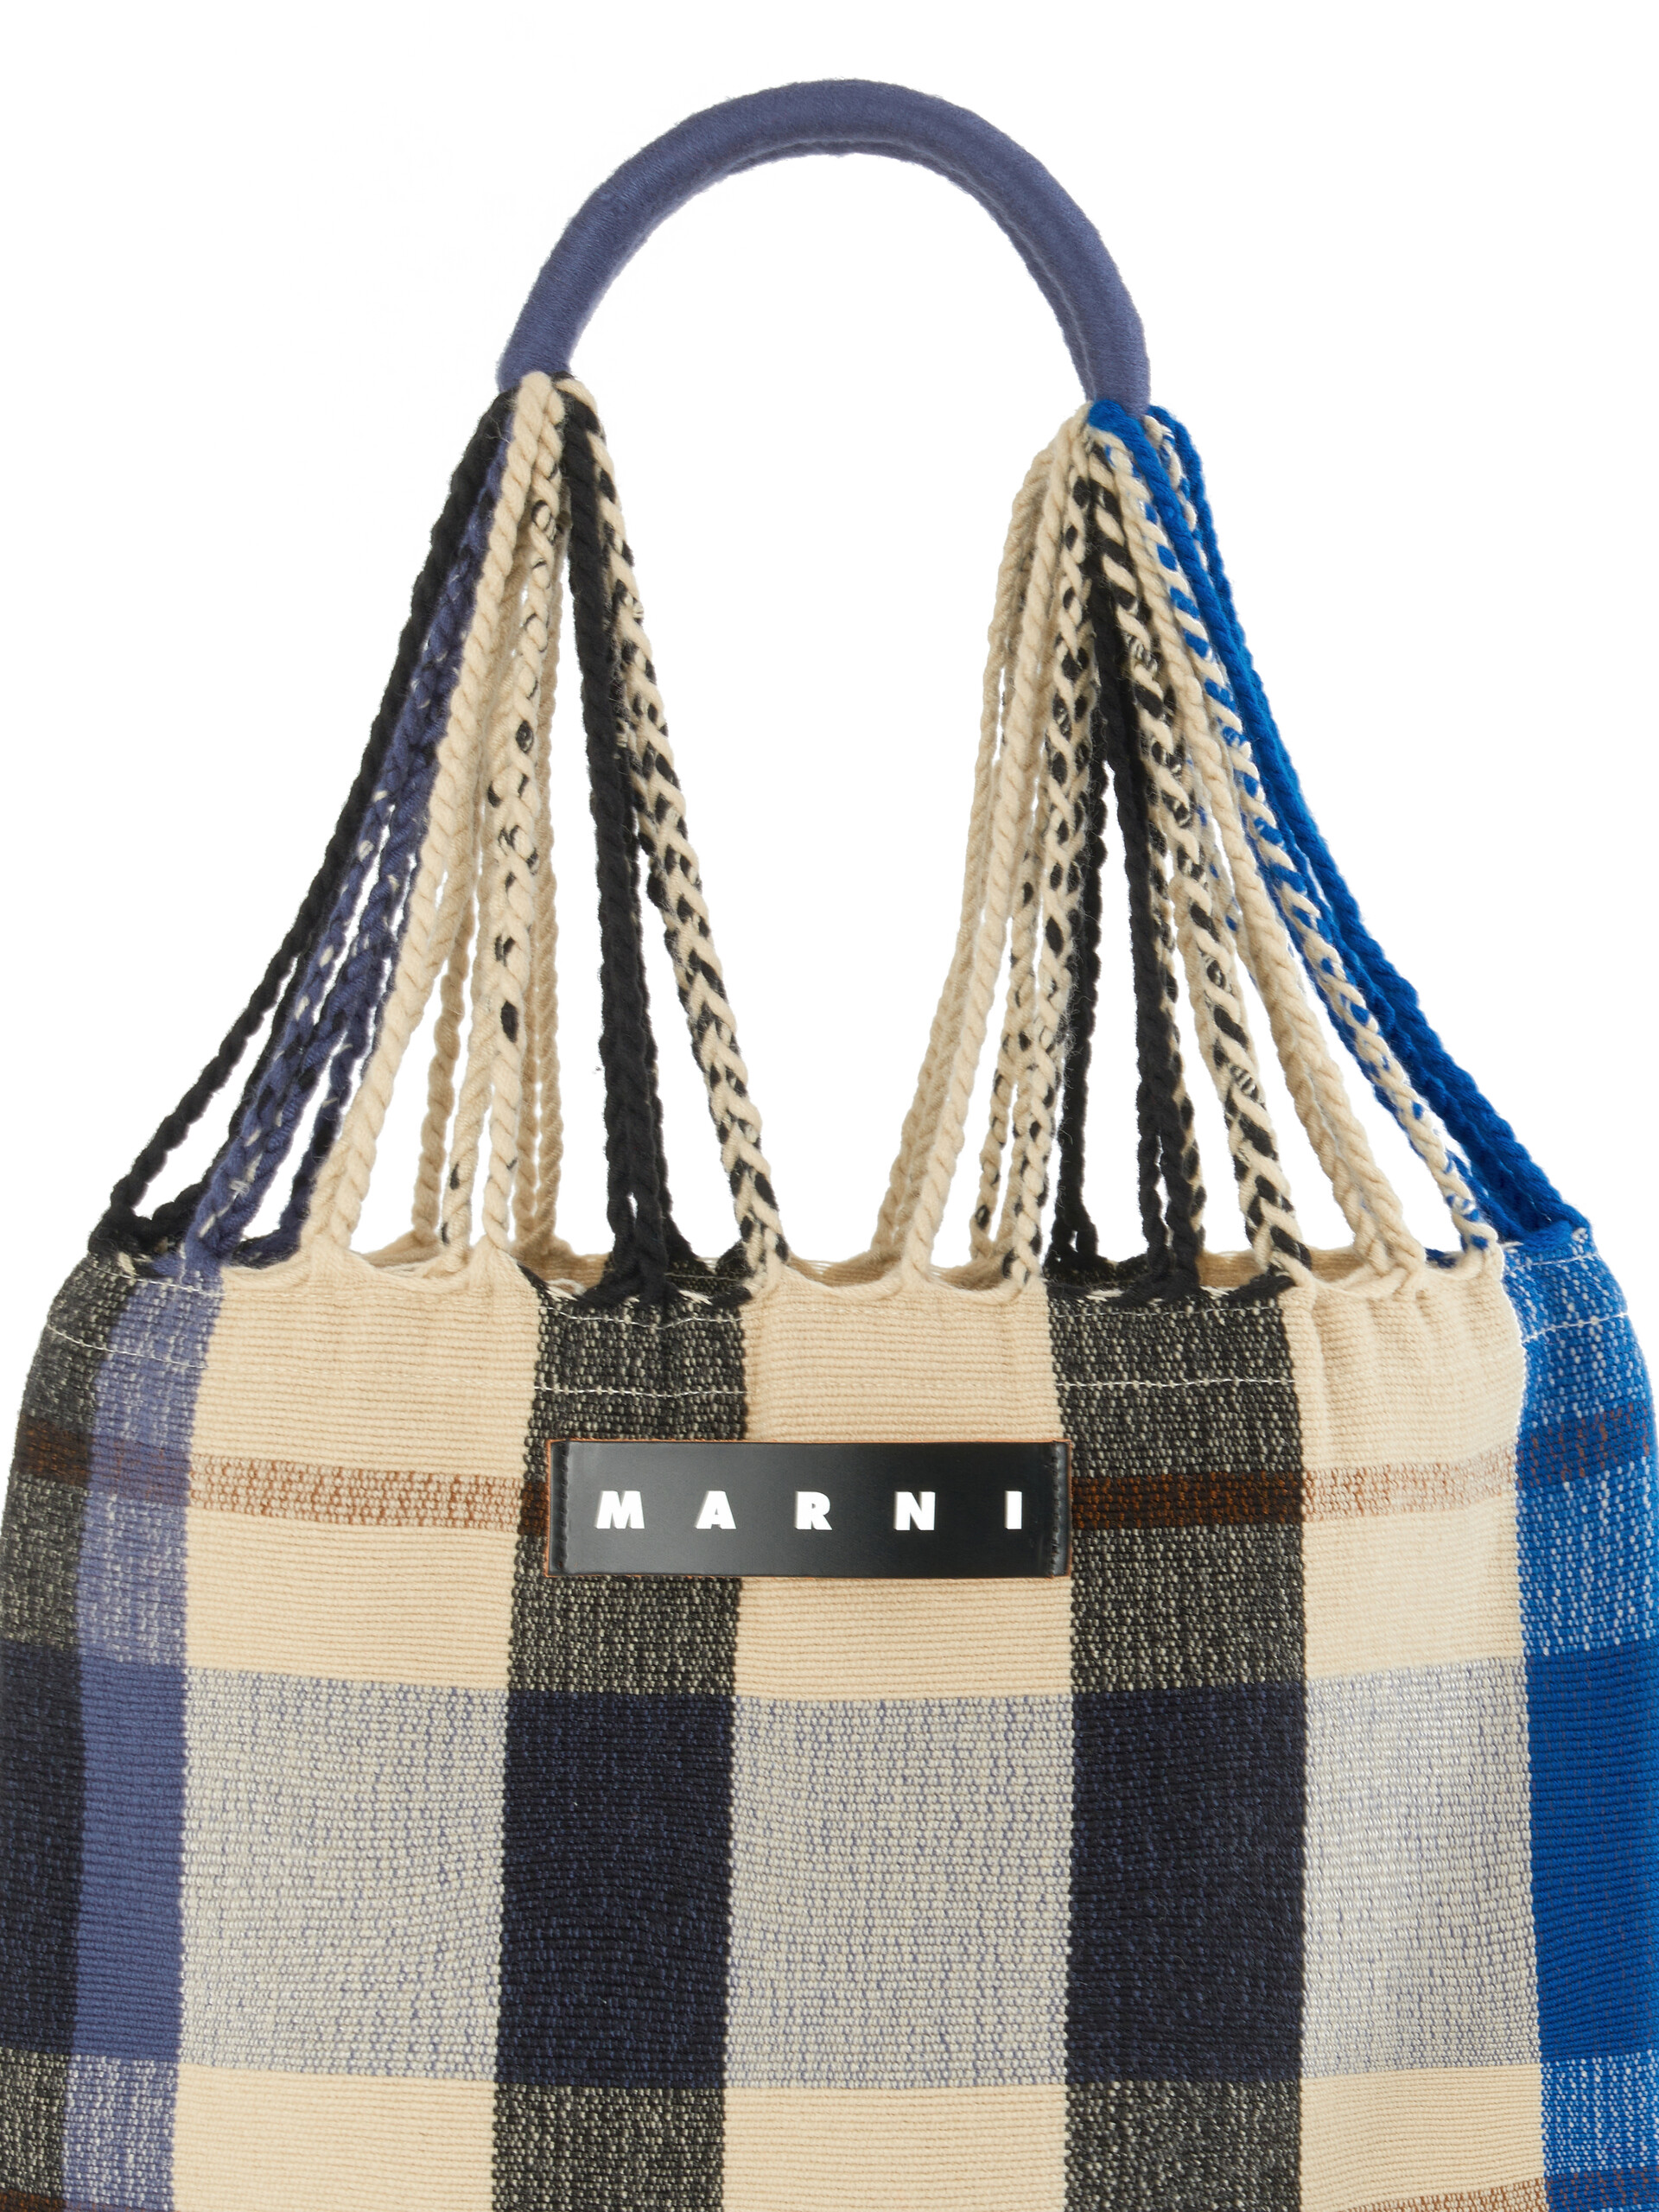 Blue checked MARNI MARKET HAMMOCK crochet bag - Shopping Bags - Image 4